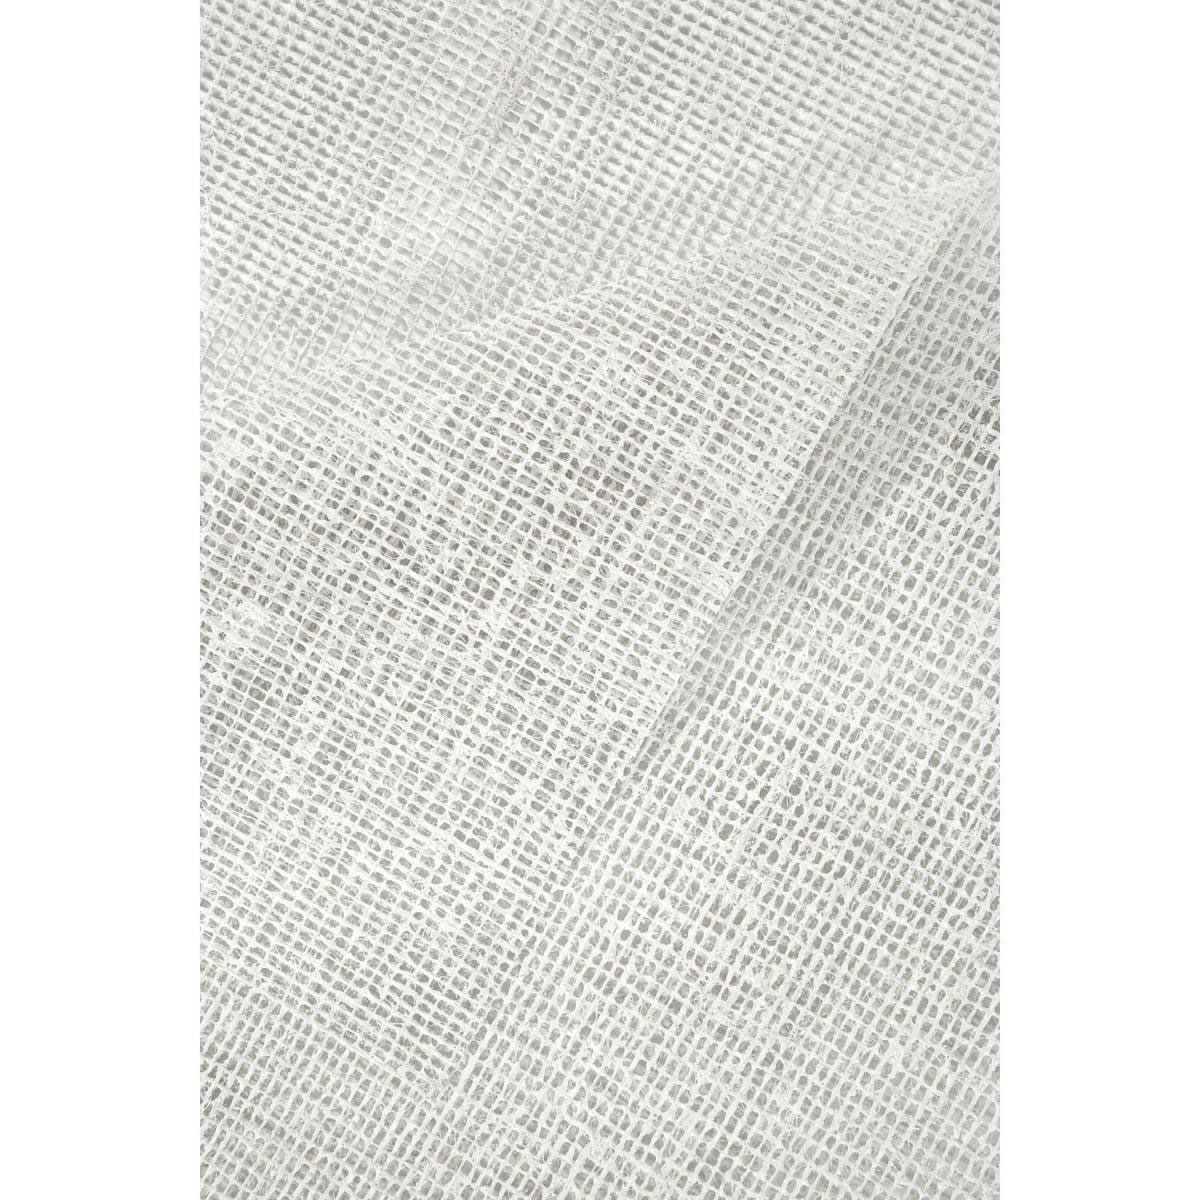 Teppich „Teppich-Stop“ 160x230 cm, Weiß, Gitter